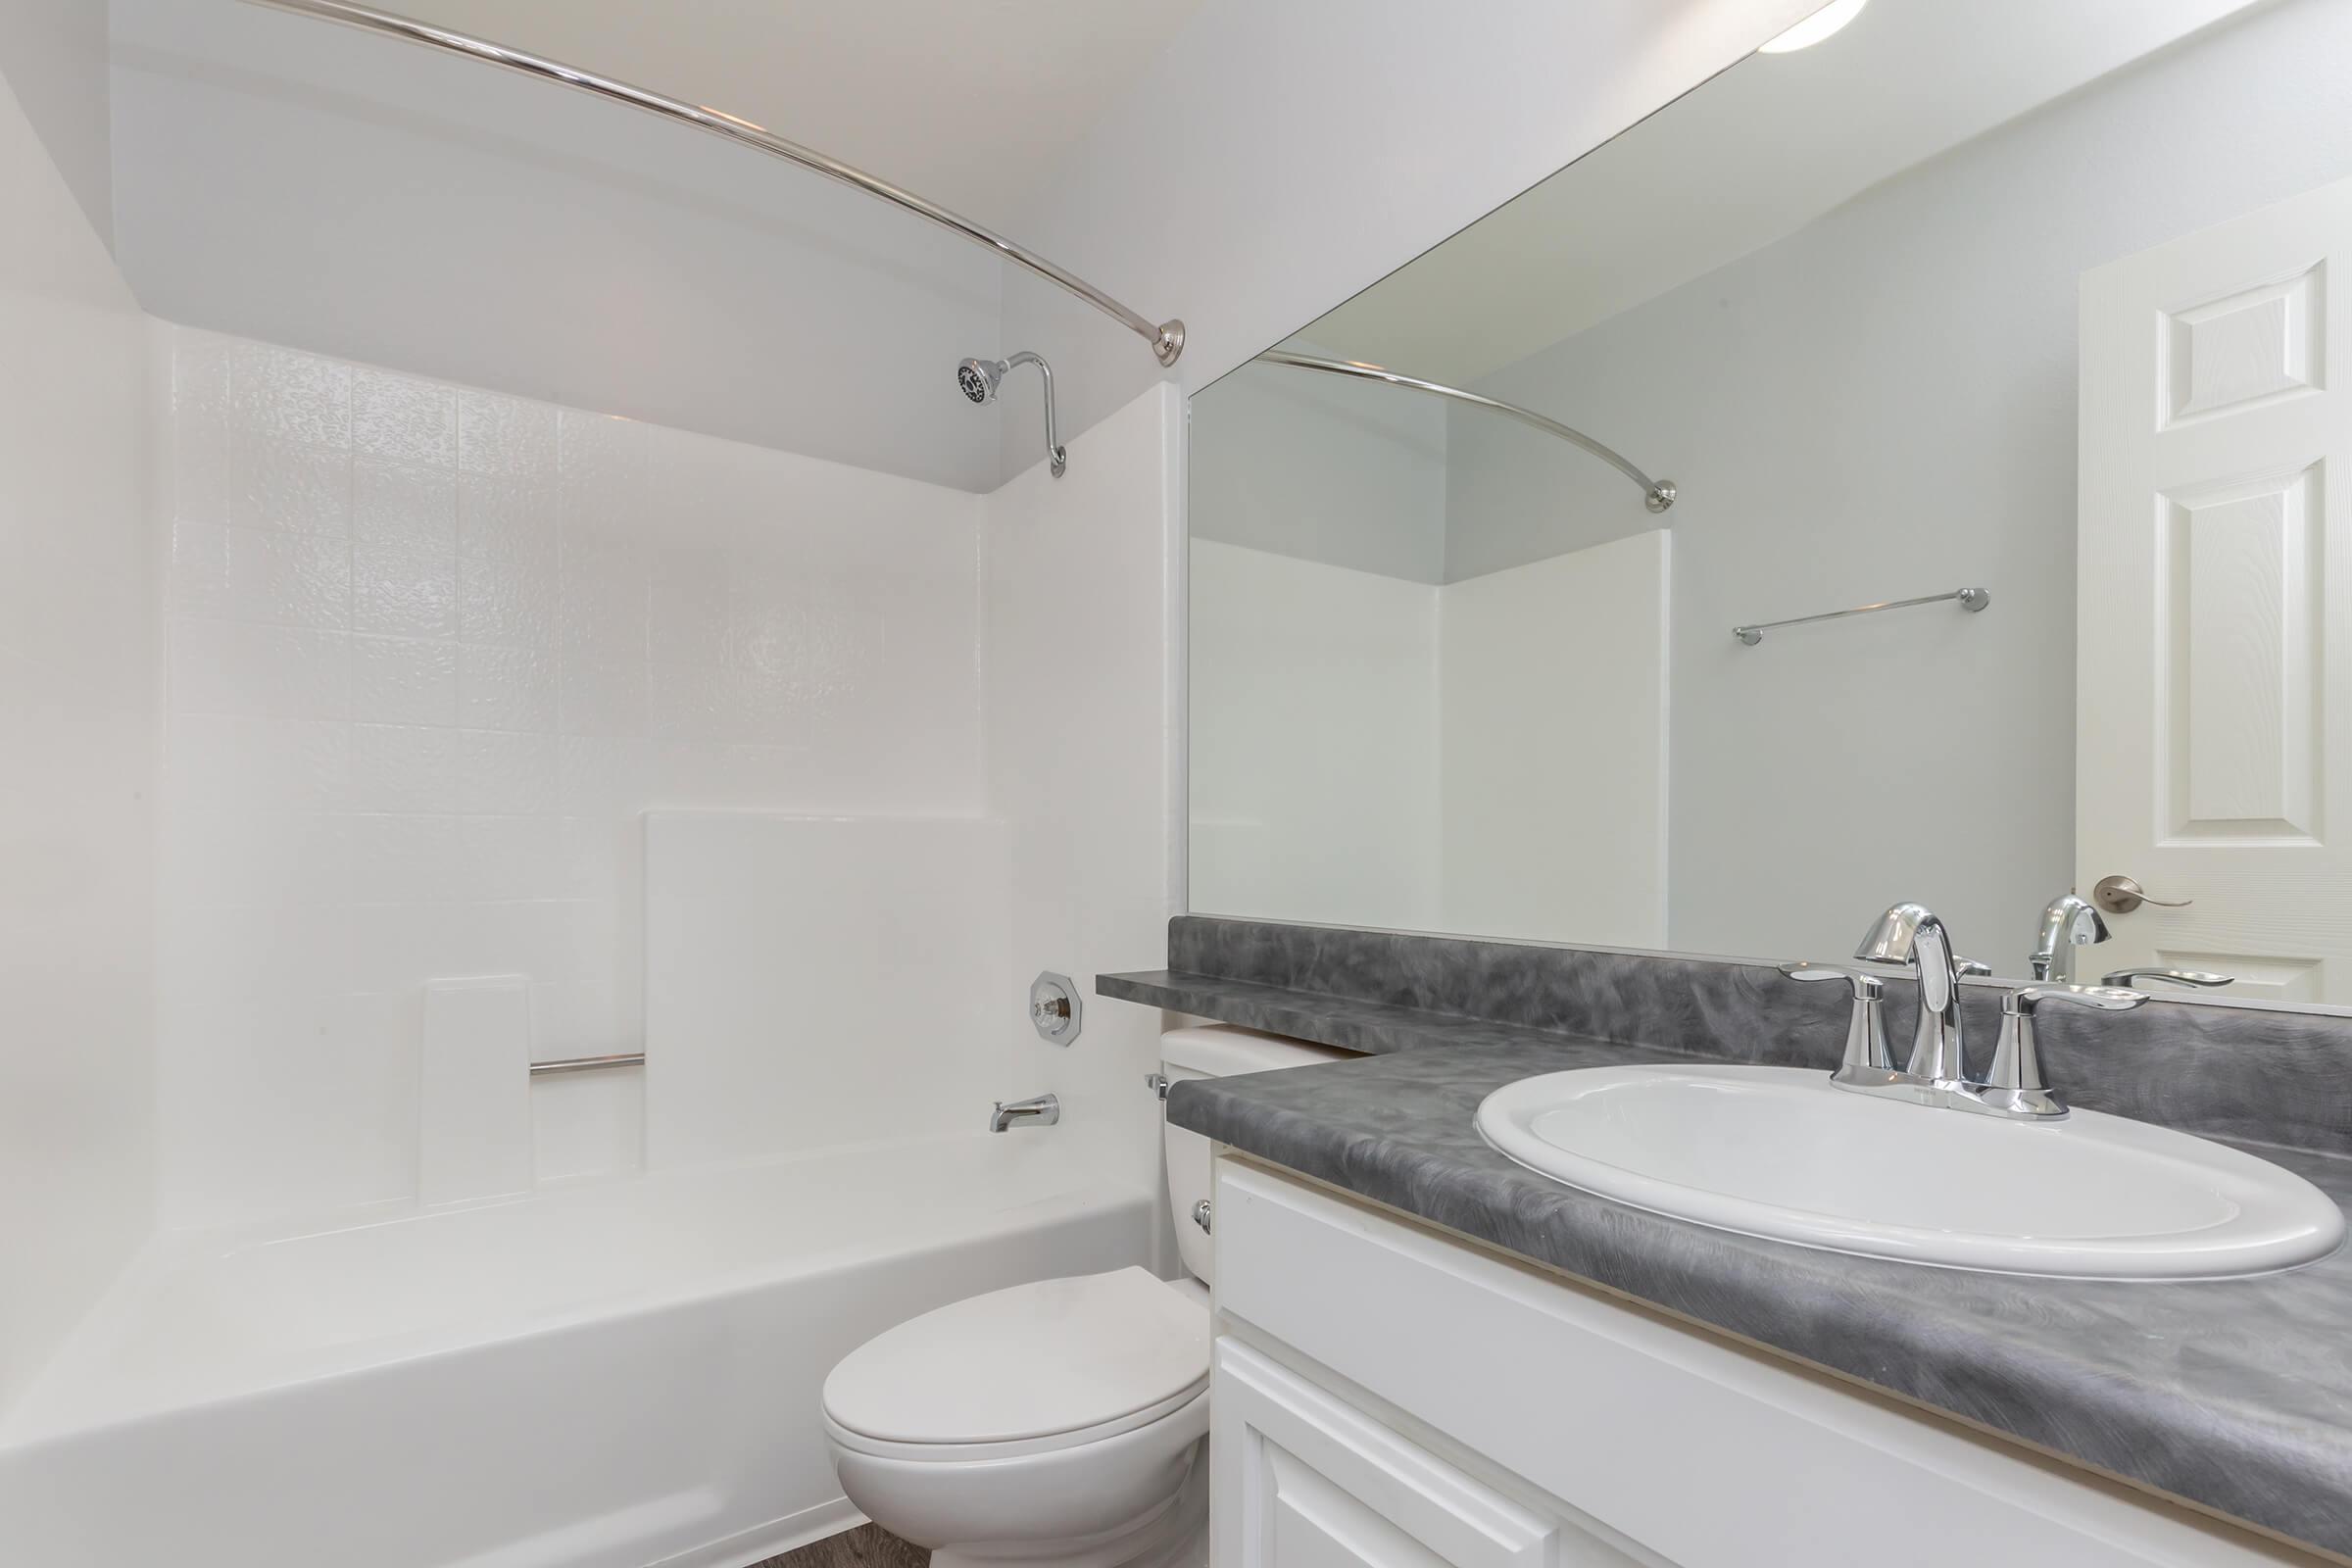 Bathroom with gray countertops